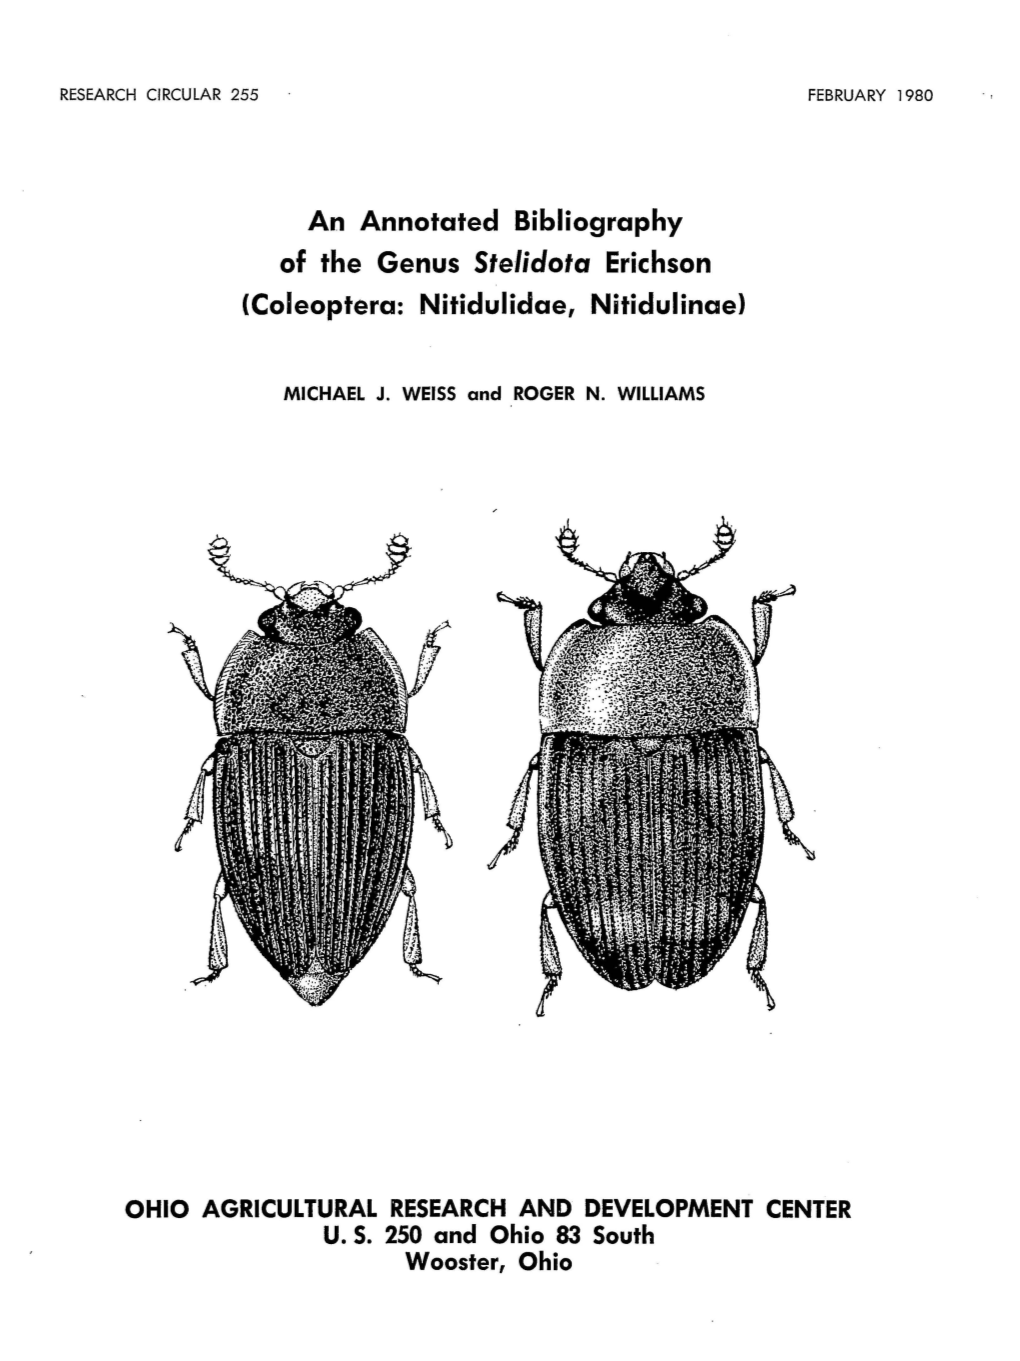 Of the Genus Stelidota Erichson (Coleoptera: Nitidulidae, Nitidulinae)